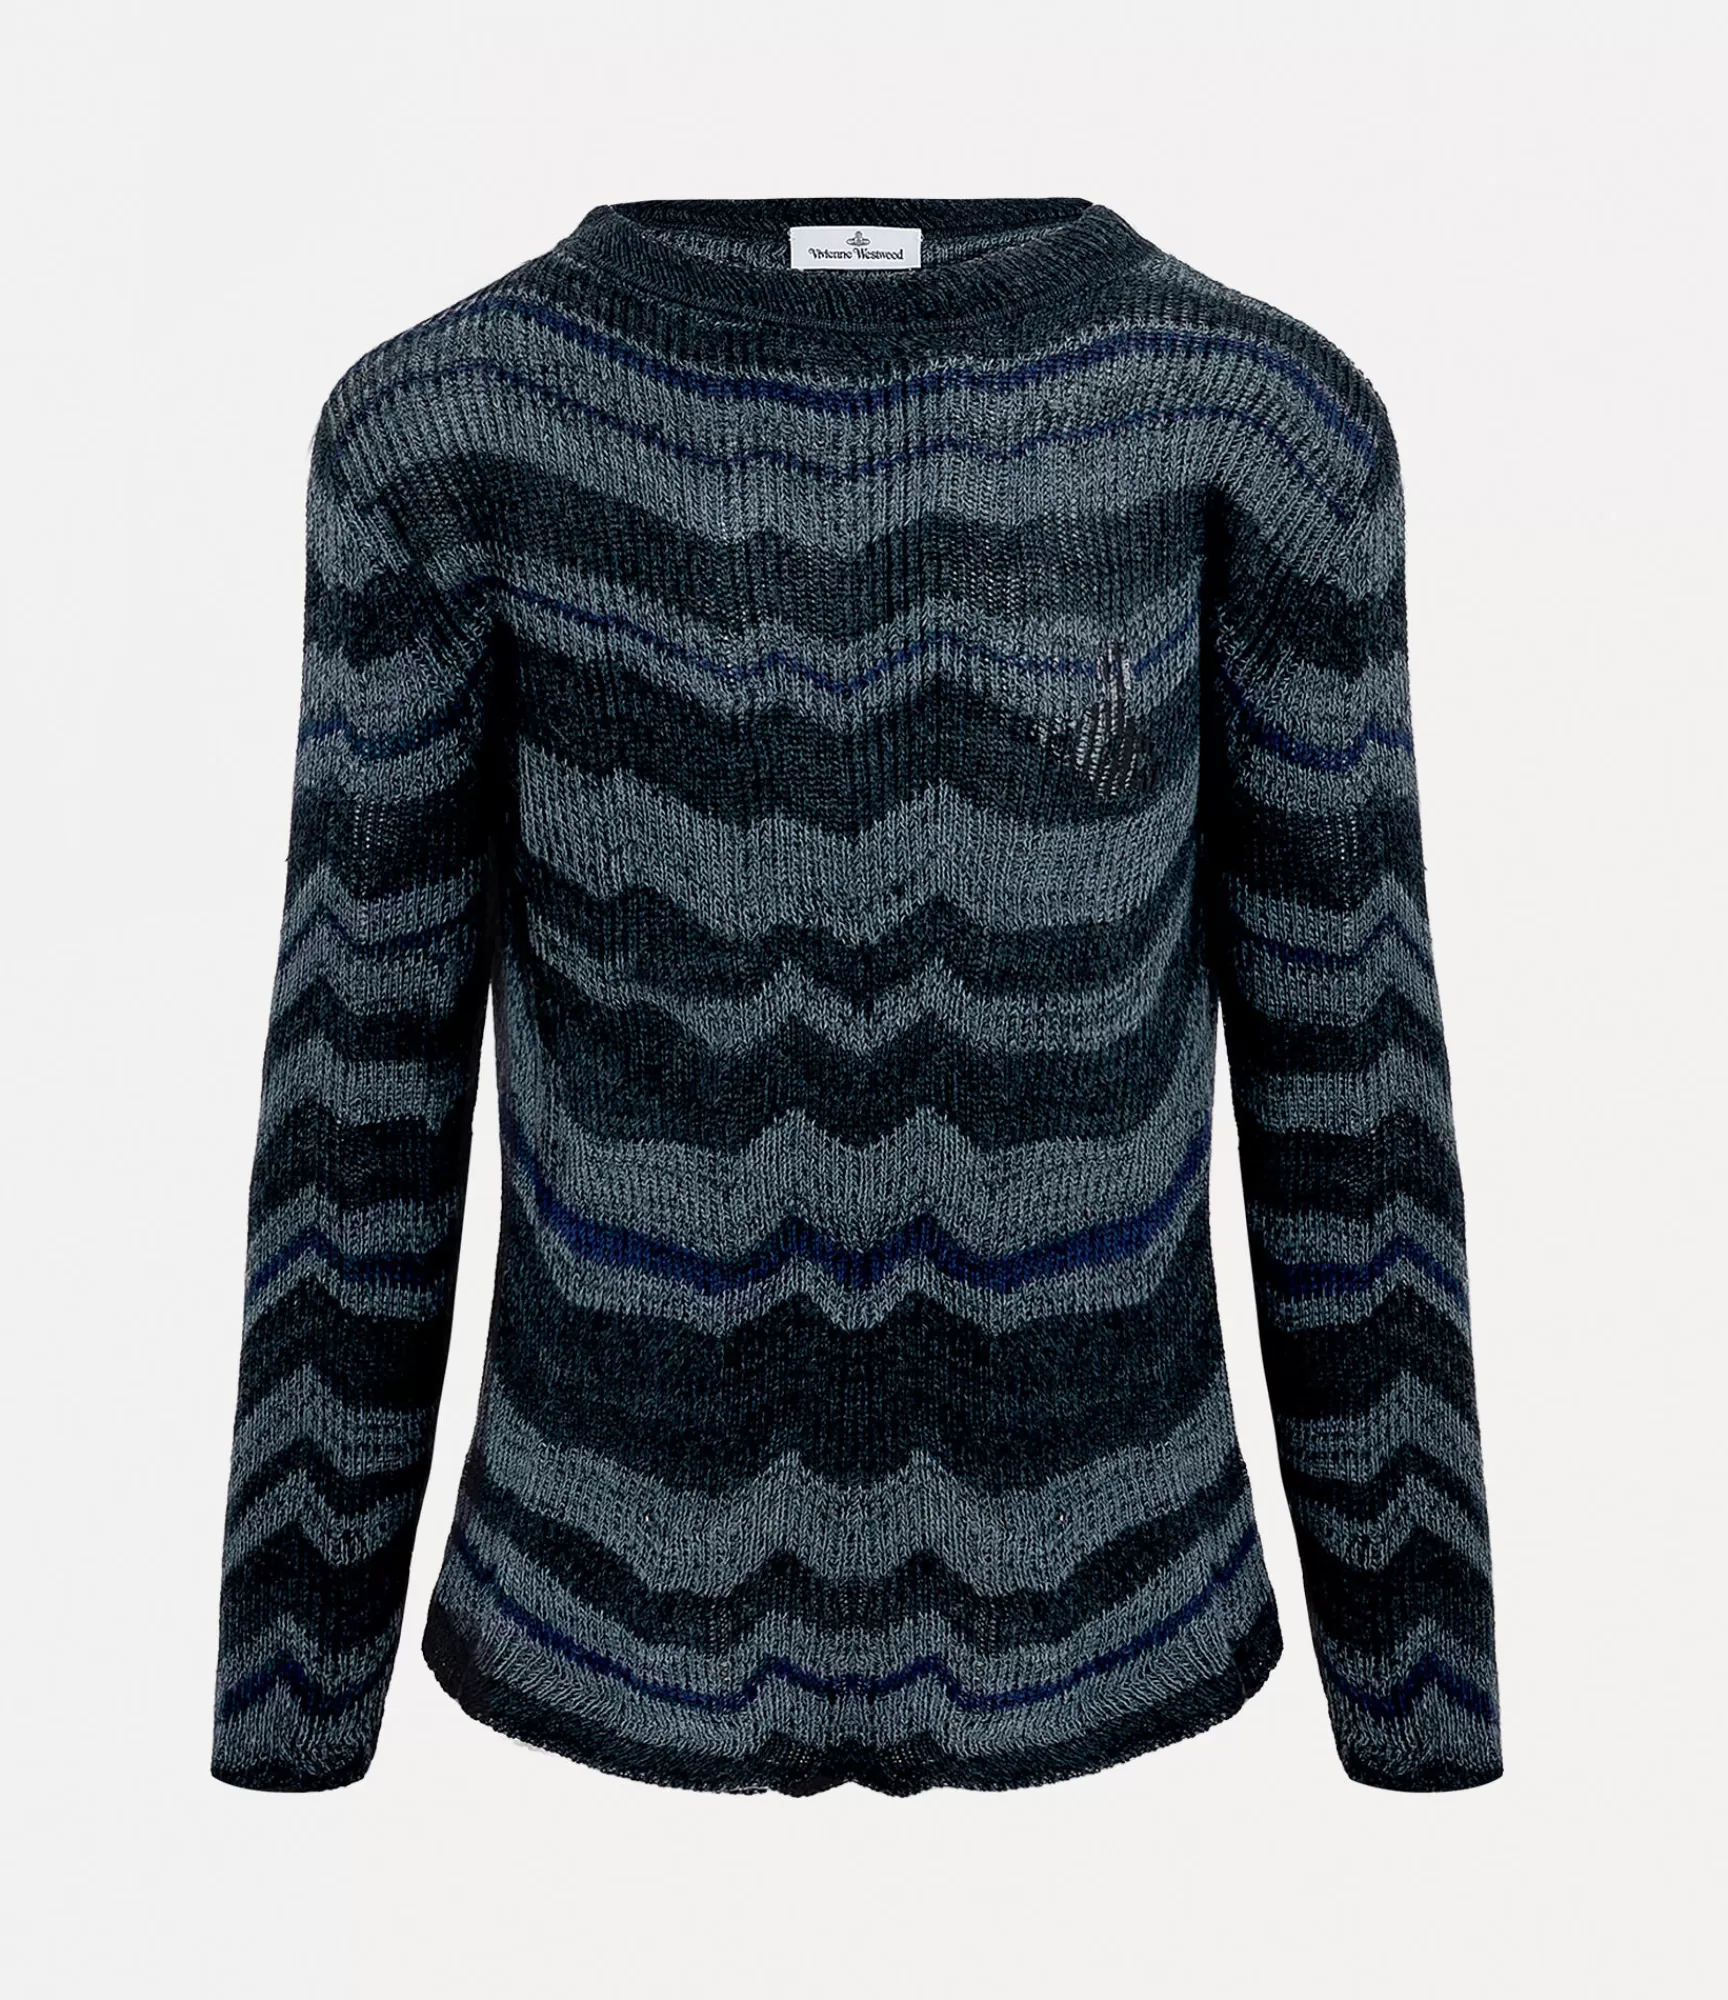 Vivienne Westwood Knitwear*Bedrock jumper Melange Blue